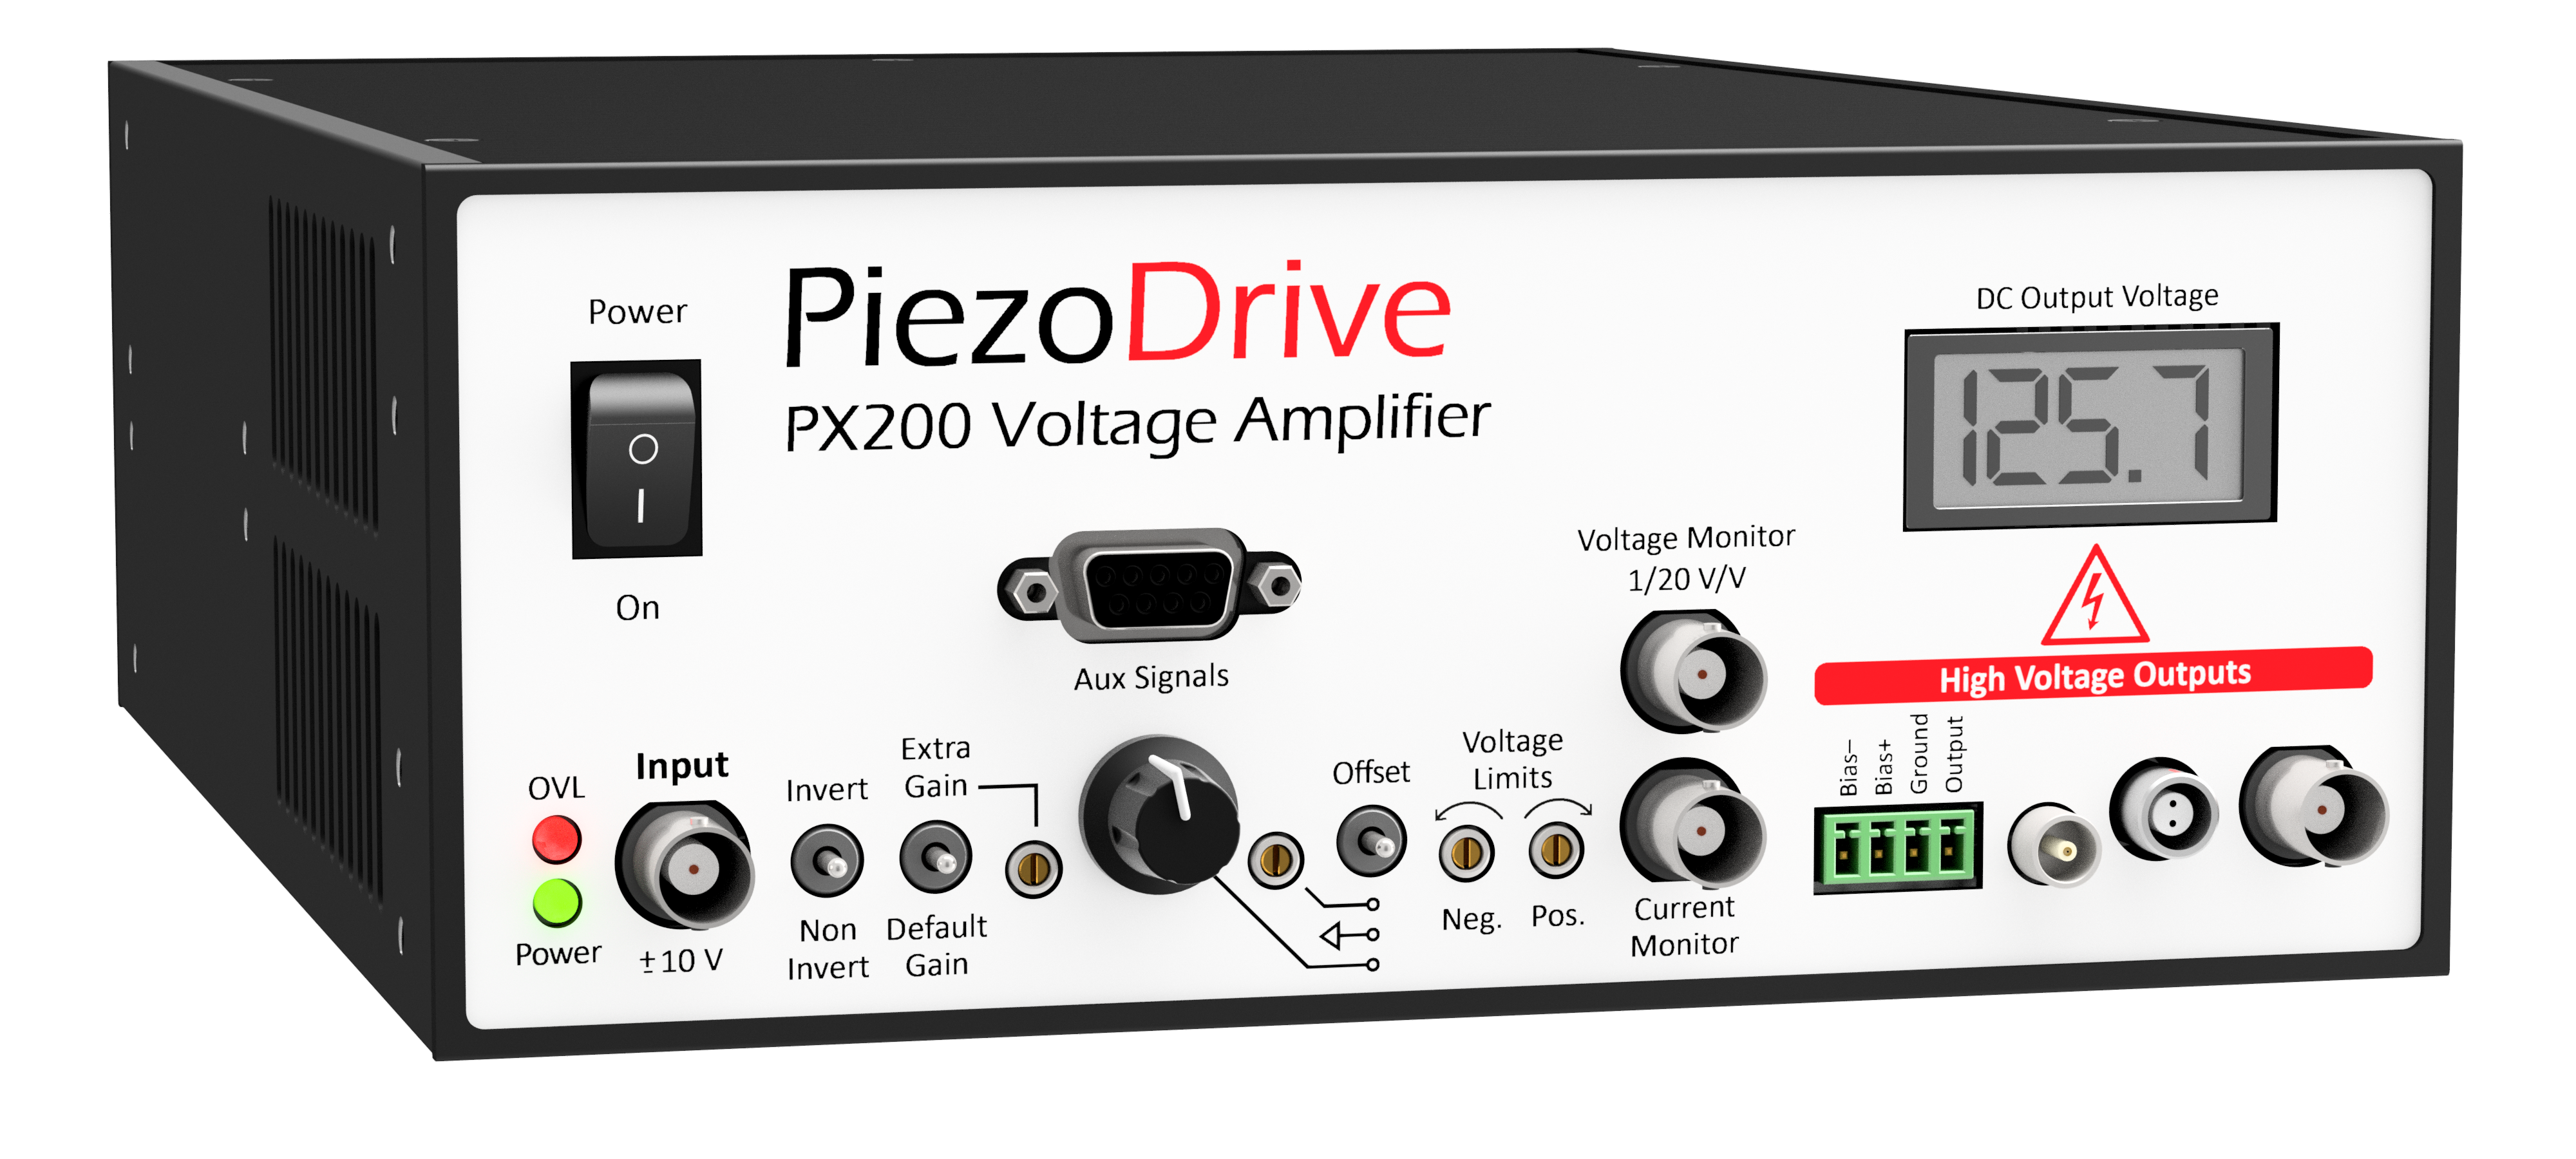 Piezodrive PX200电压放大器, 压电陶瓷驱动器，140W功率放大器，,适用于电光、超声波、振动控制、纳米定位系统和压电电机等各种应用